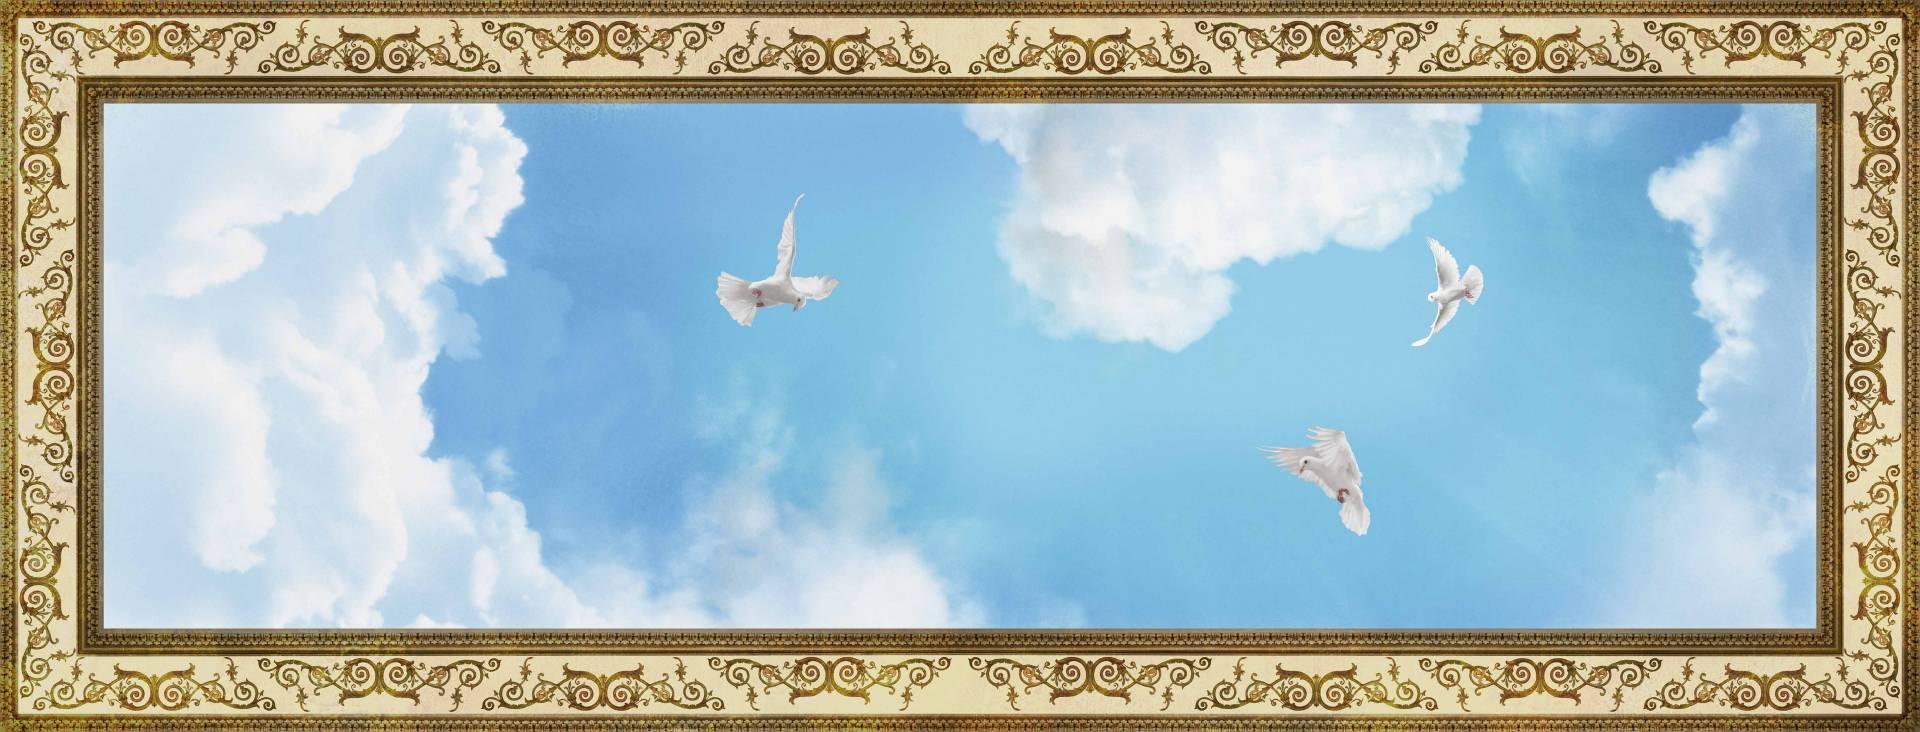 Картина \"Голубь в небе\" | Интернет-магазин картин \"АртФактор\"